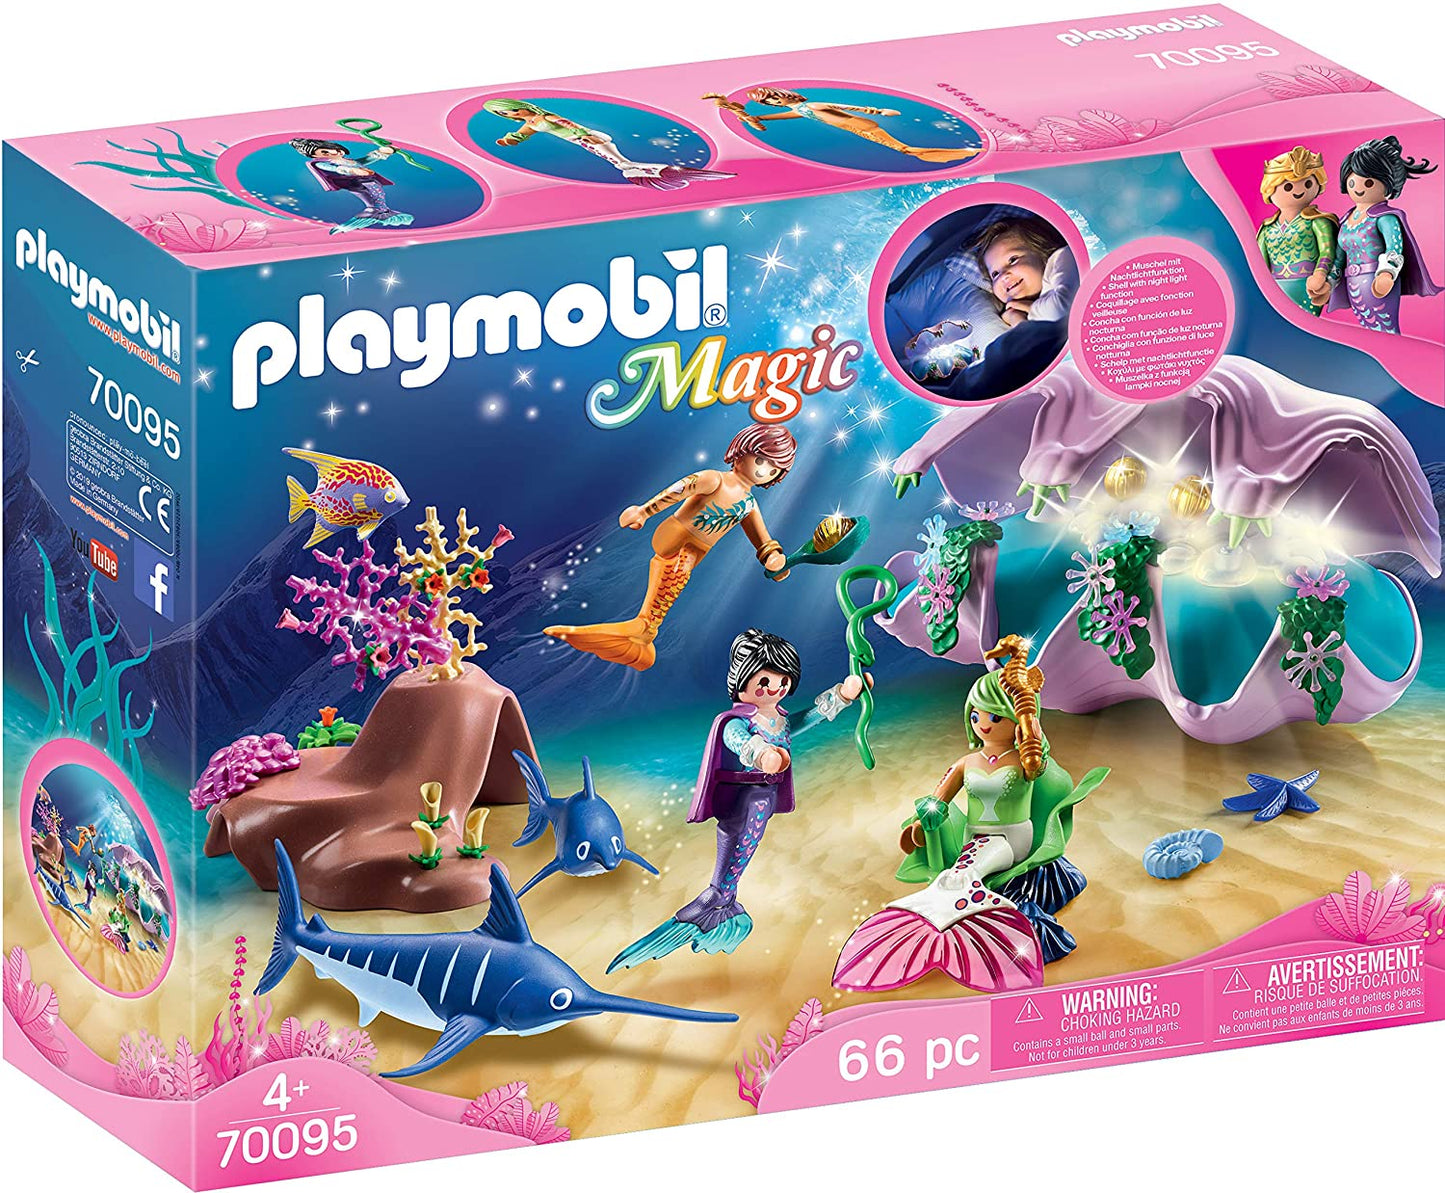 Playmobil Magic Pearl Shell Nightlight